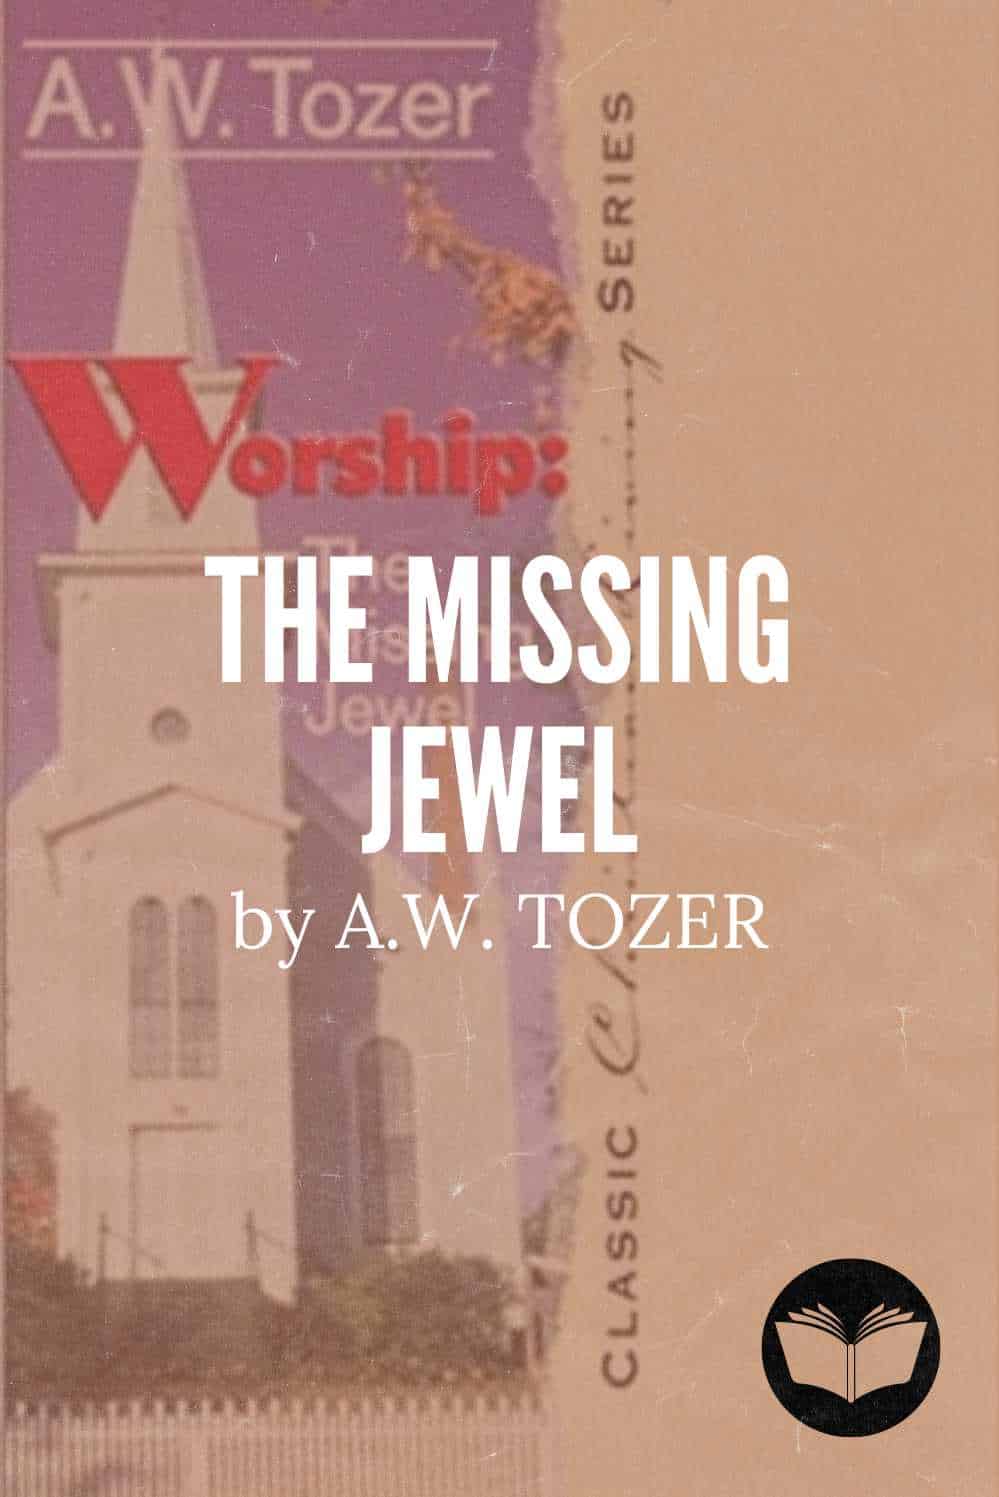 Worship: The Missing Jewel